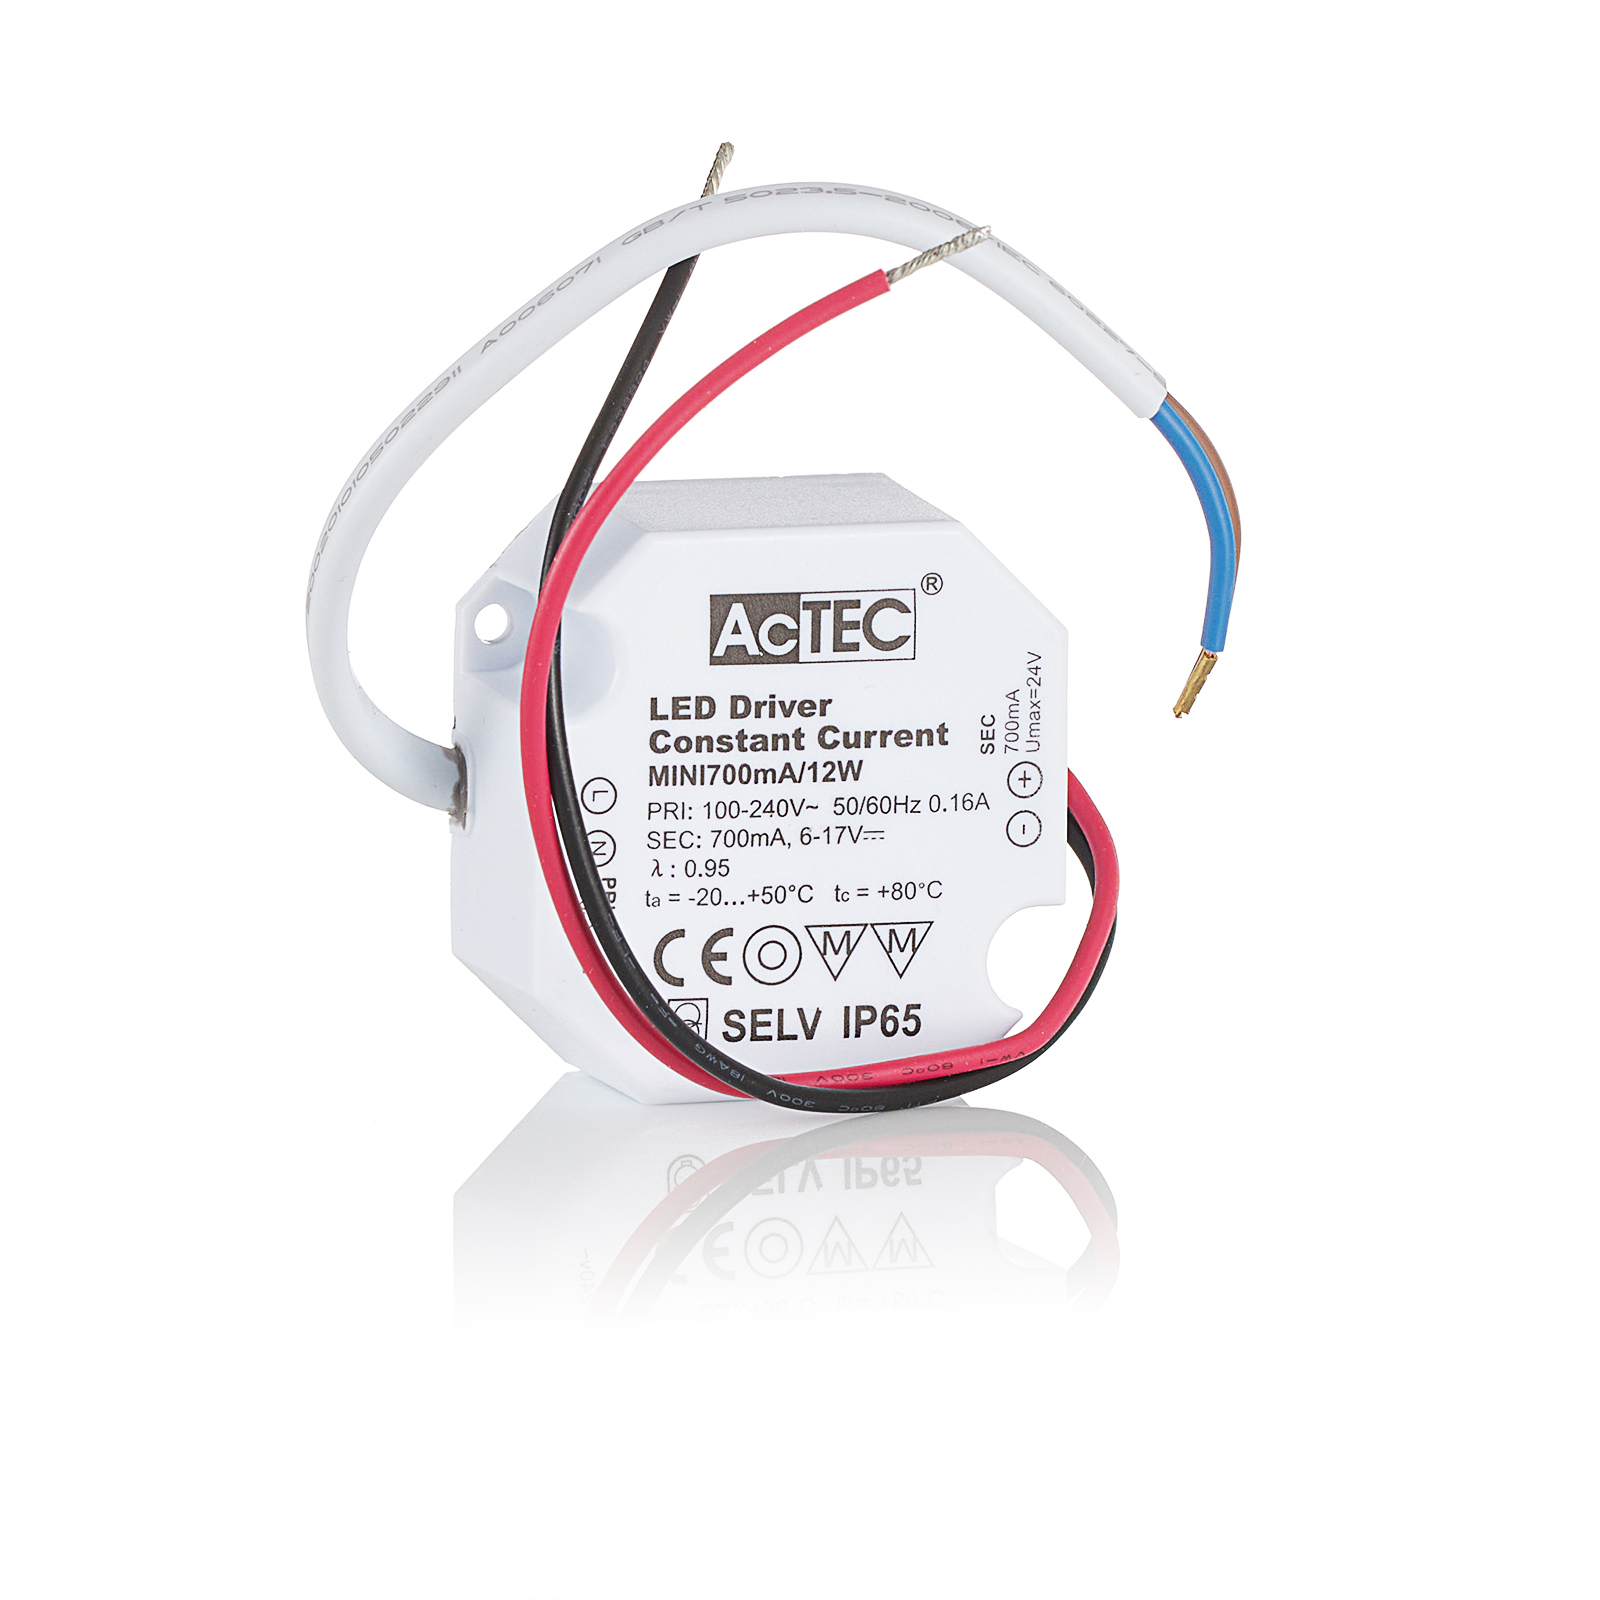 AcTEC Mini driver LED CC 700mA, 12W, IP65